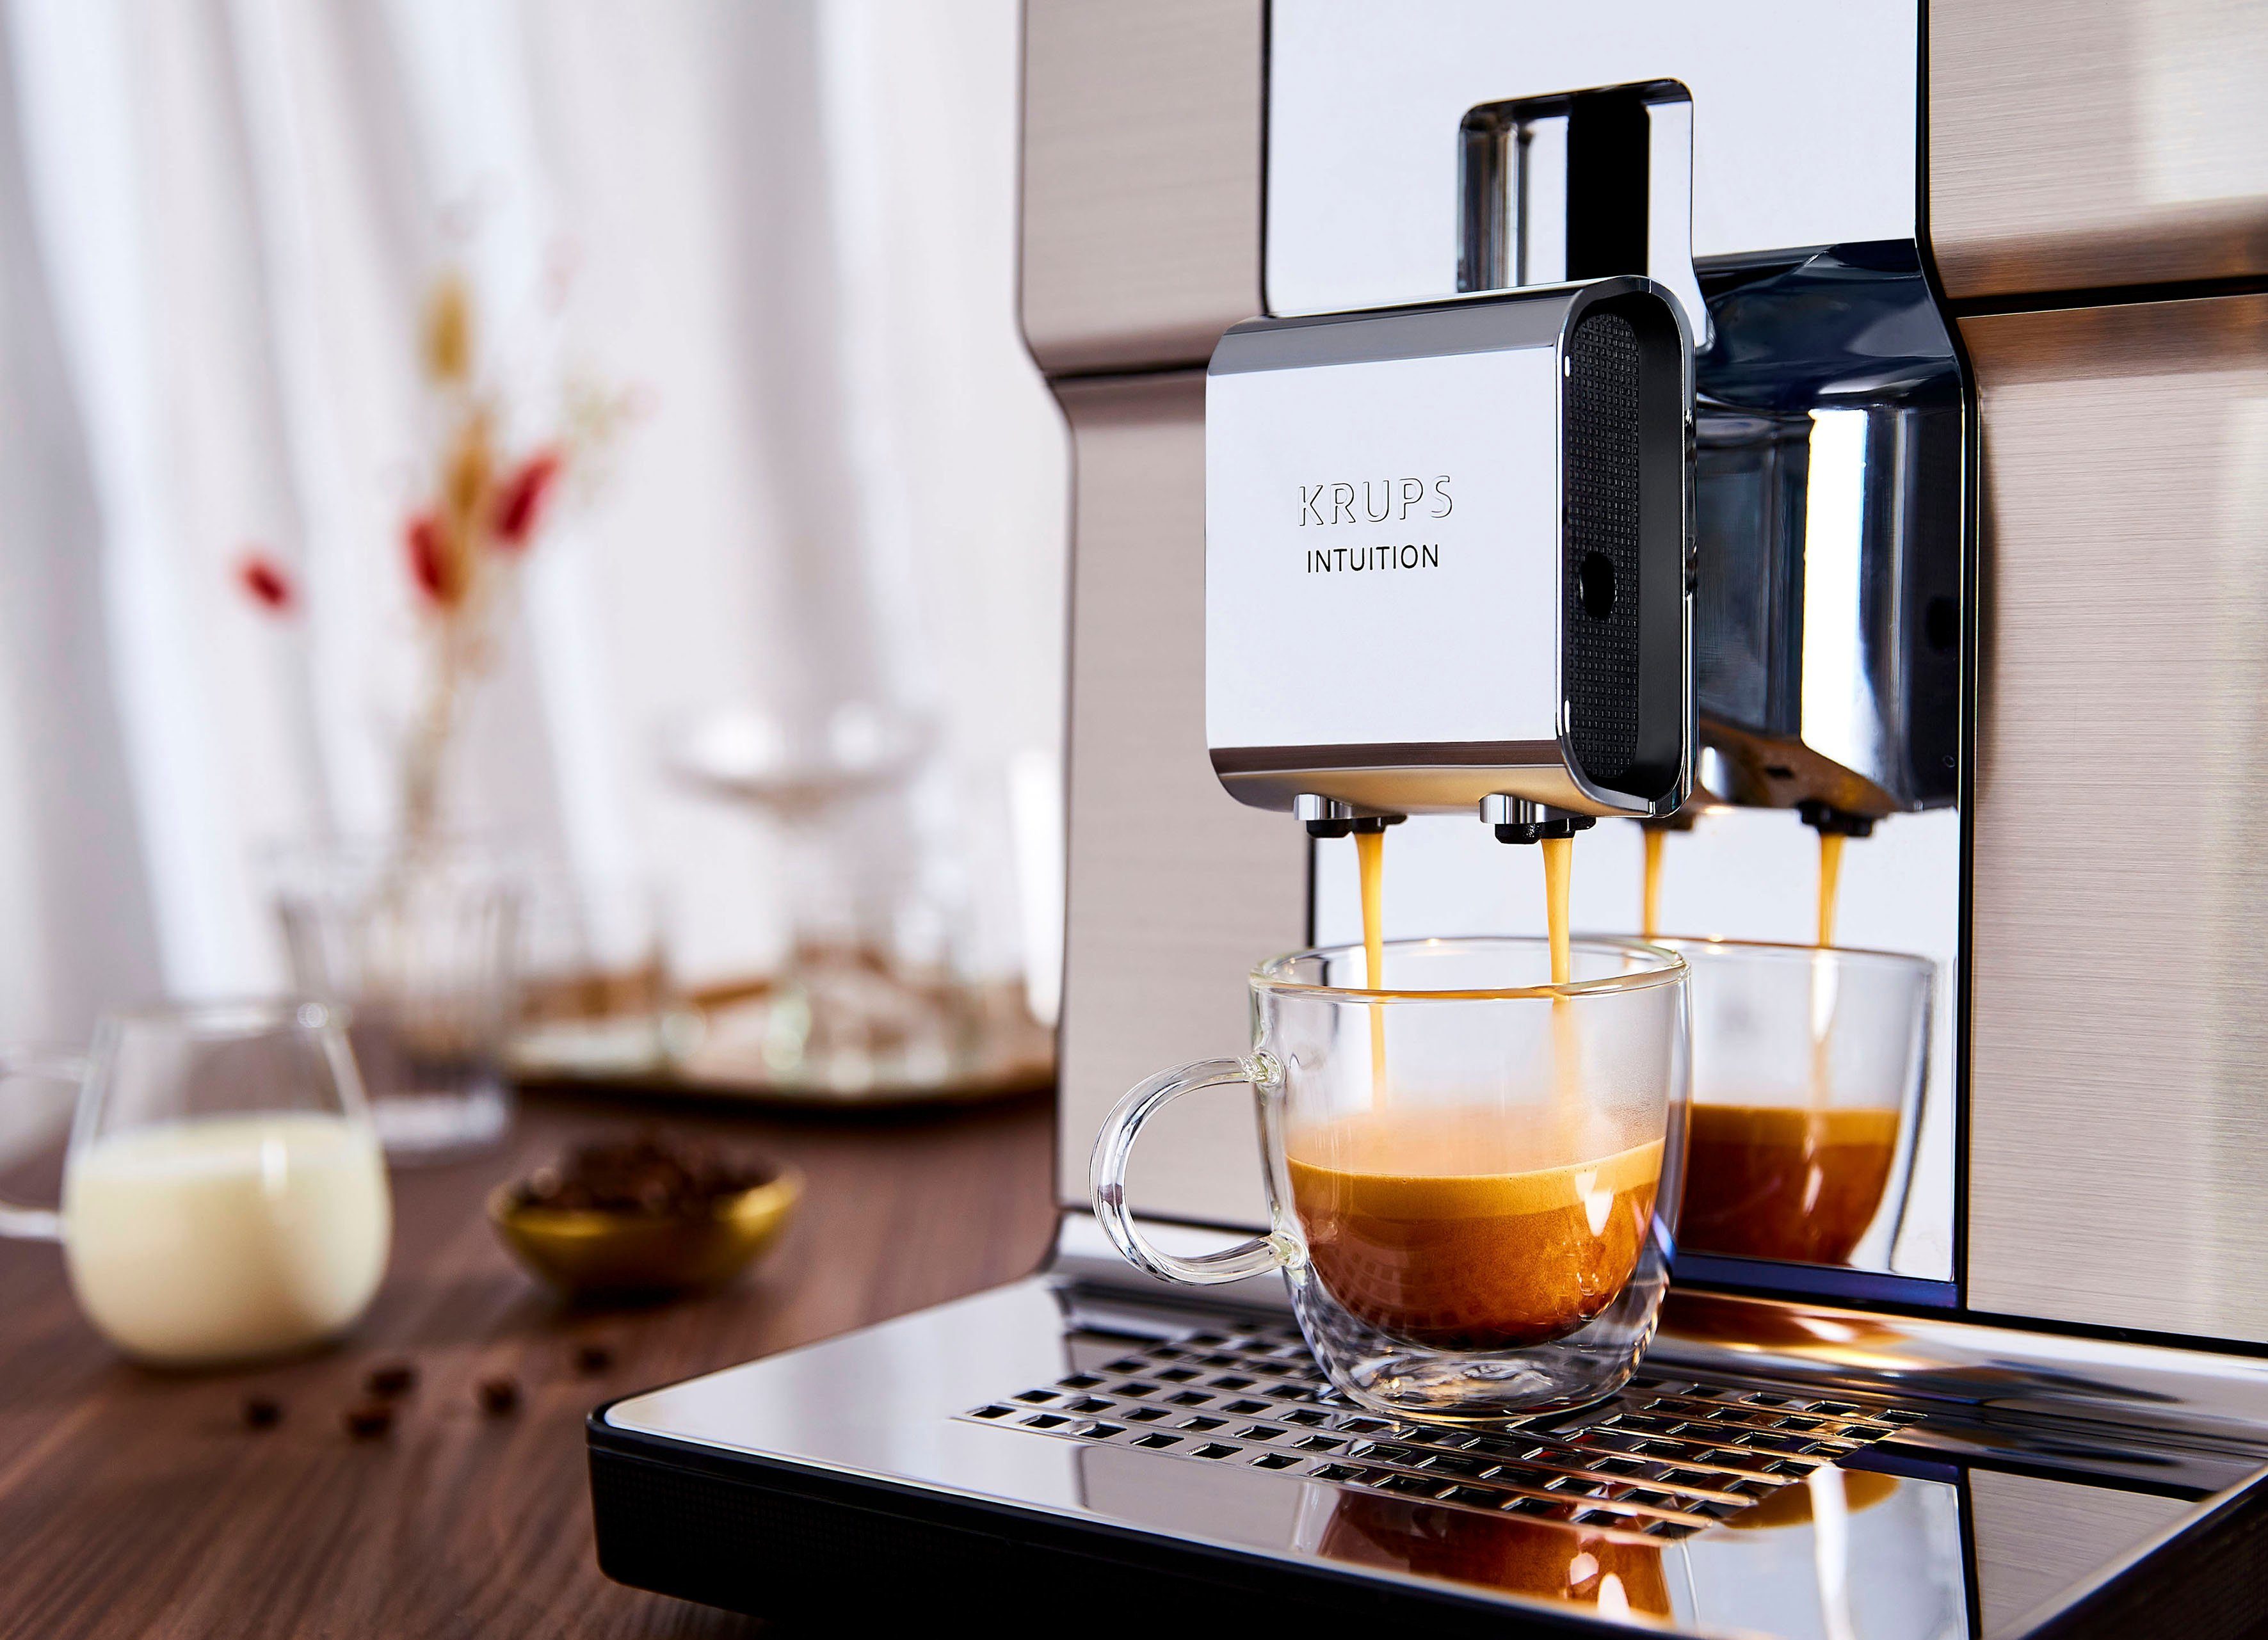 Kaffeevollautomat Intuition EA877D geräuscharm, Farb-Touchscreen Heiß- und Krups Experience+, 21 Kaltgetränke-Spezialitäten,